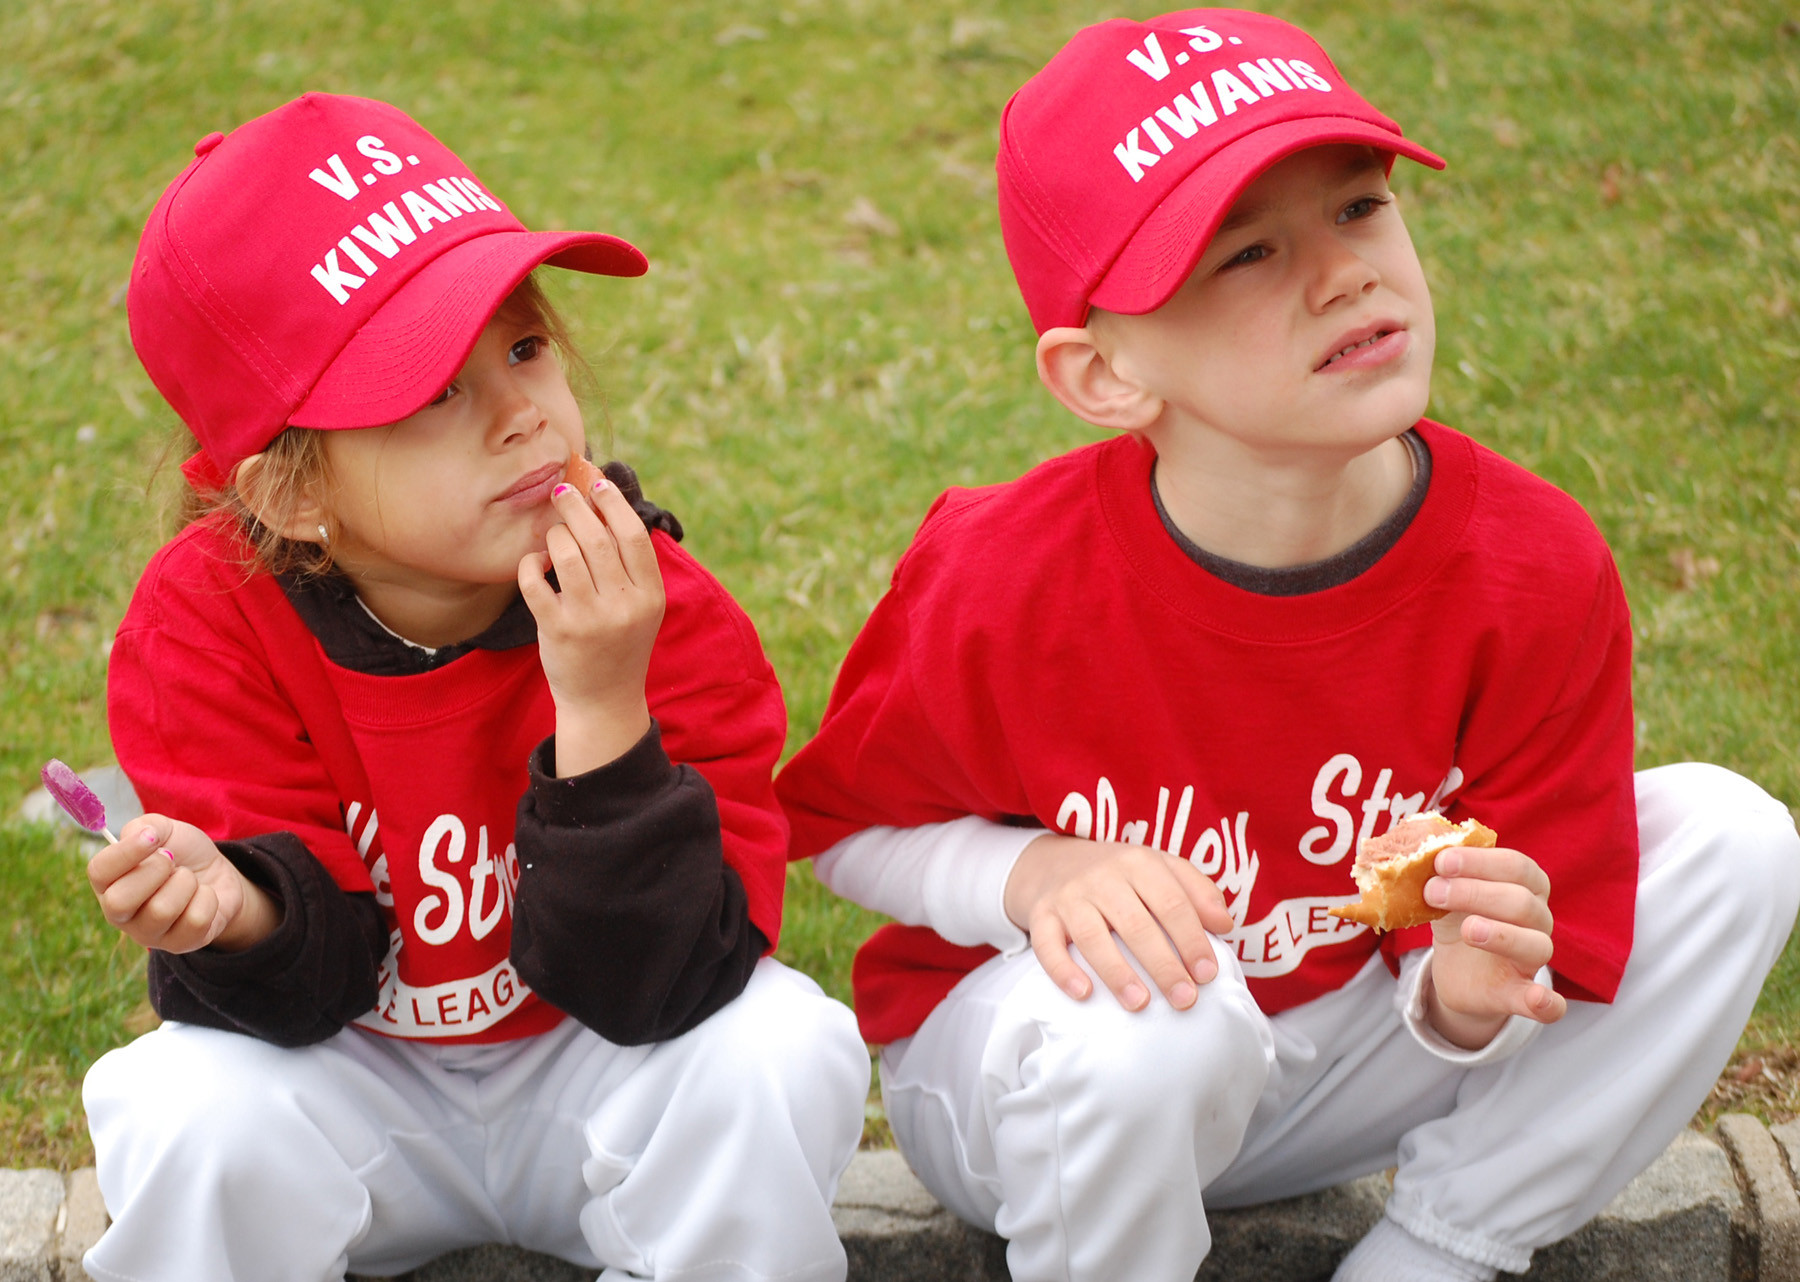 iavanna Quagliata, 4, and John Furlong Jr., 5, enjoyed a traditional baseball treat — hot dogs.